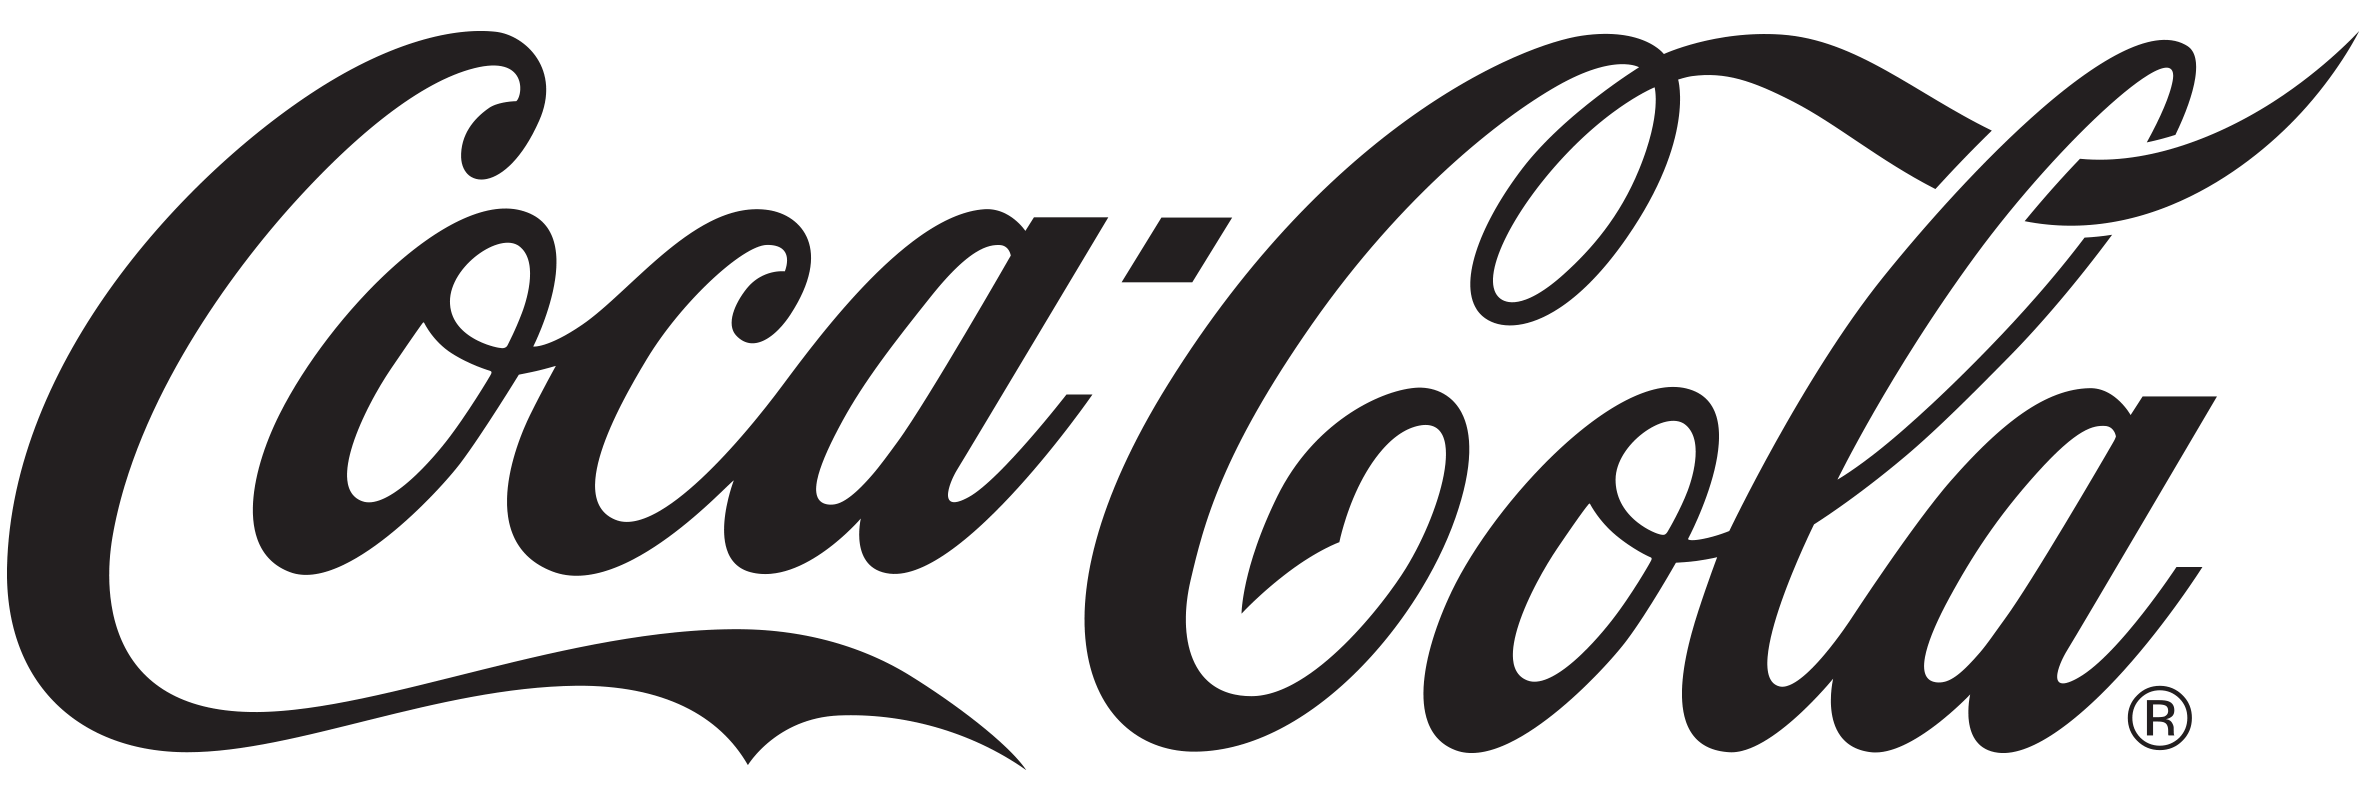 Coca Cola Cammeo Black